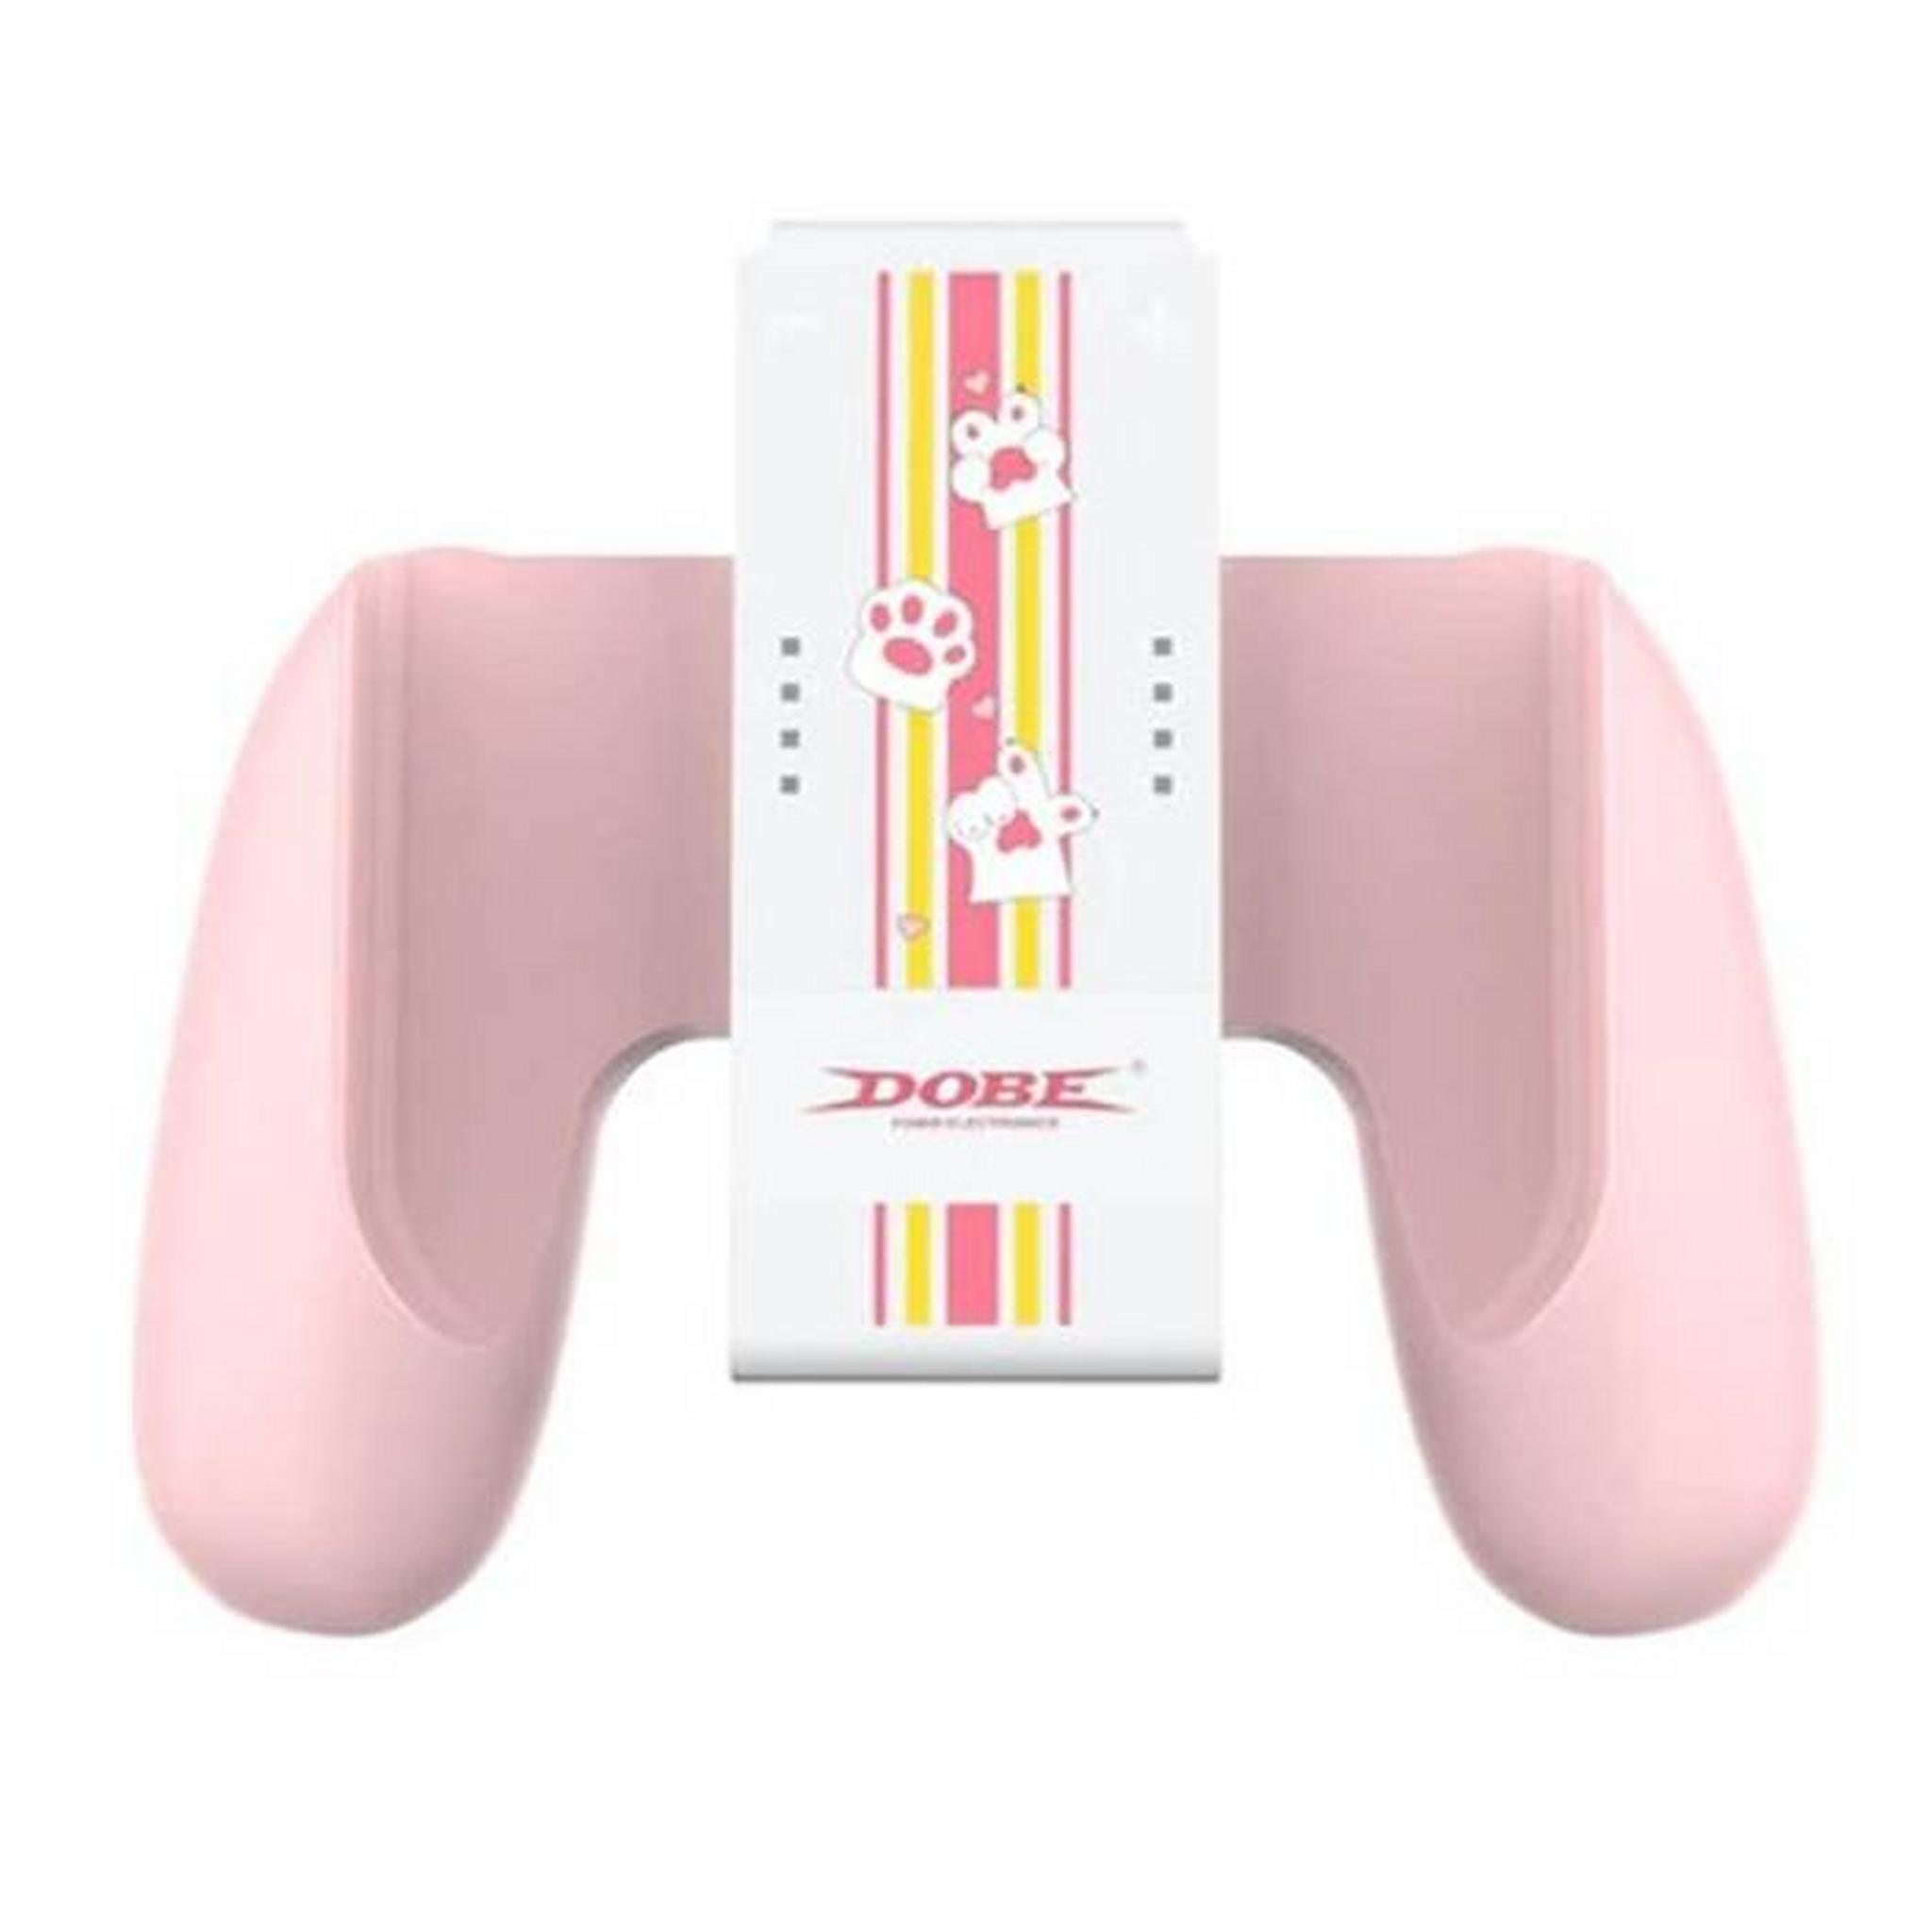 Dobe Nintendo Switch Joy-Con Charging Grip – Pink